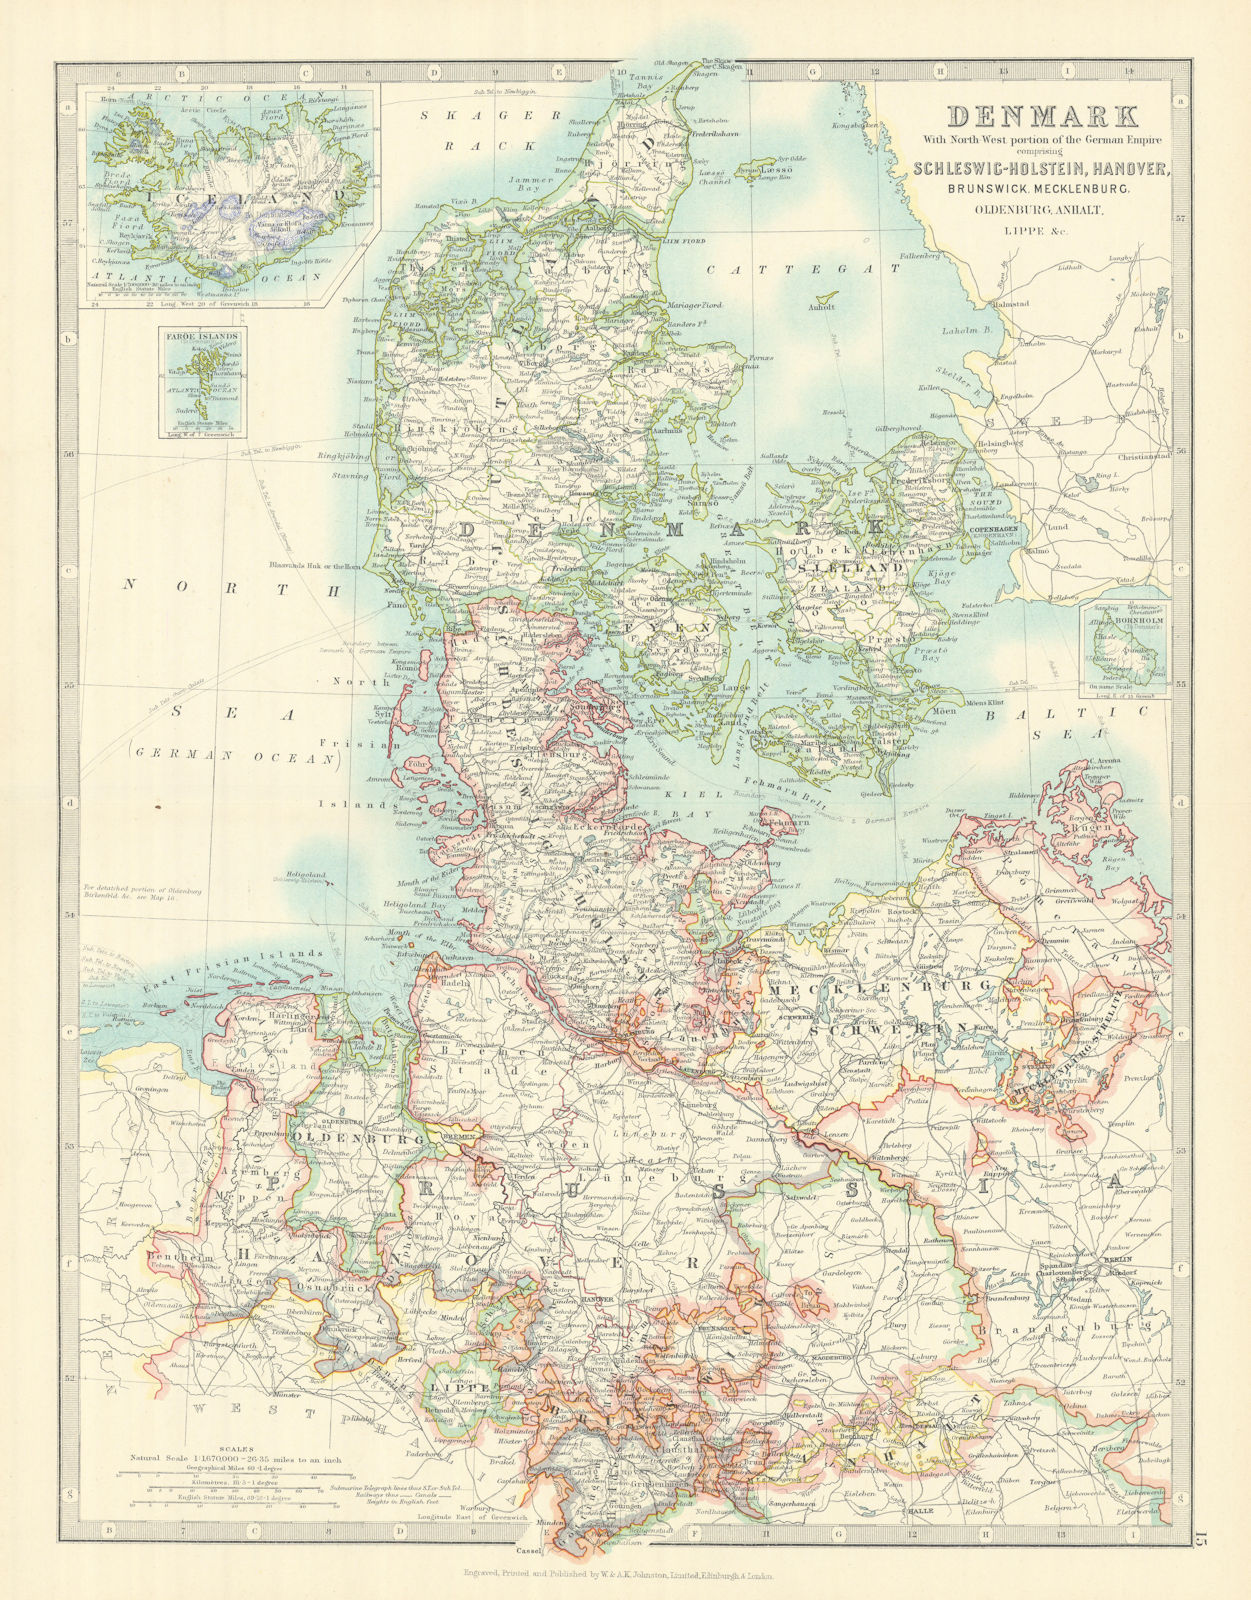 DENMARK & NORTHERN GERMANY. Schleswig-Holstein Hanover. JOHNSTON 1913 old map